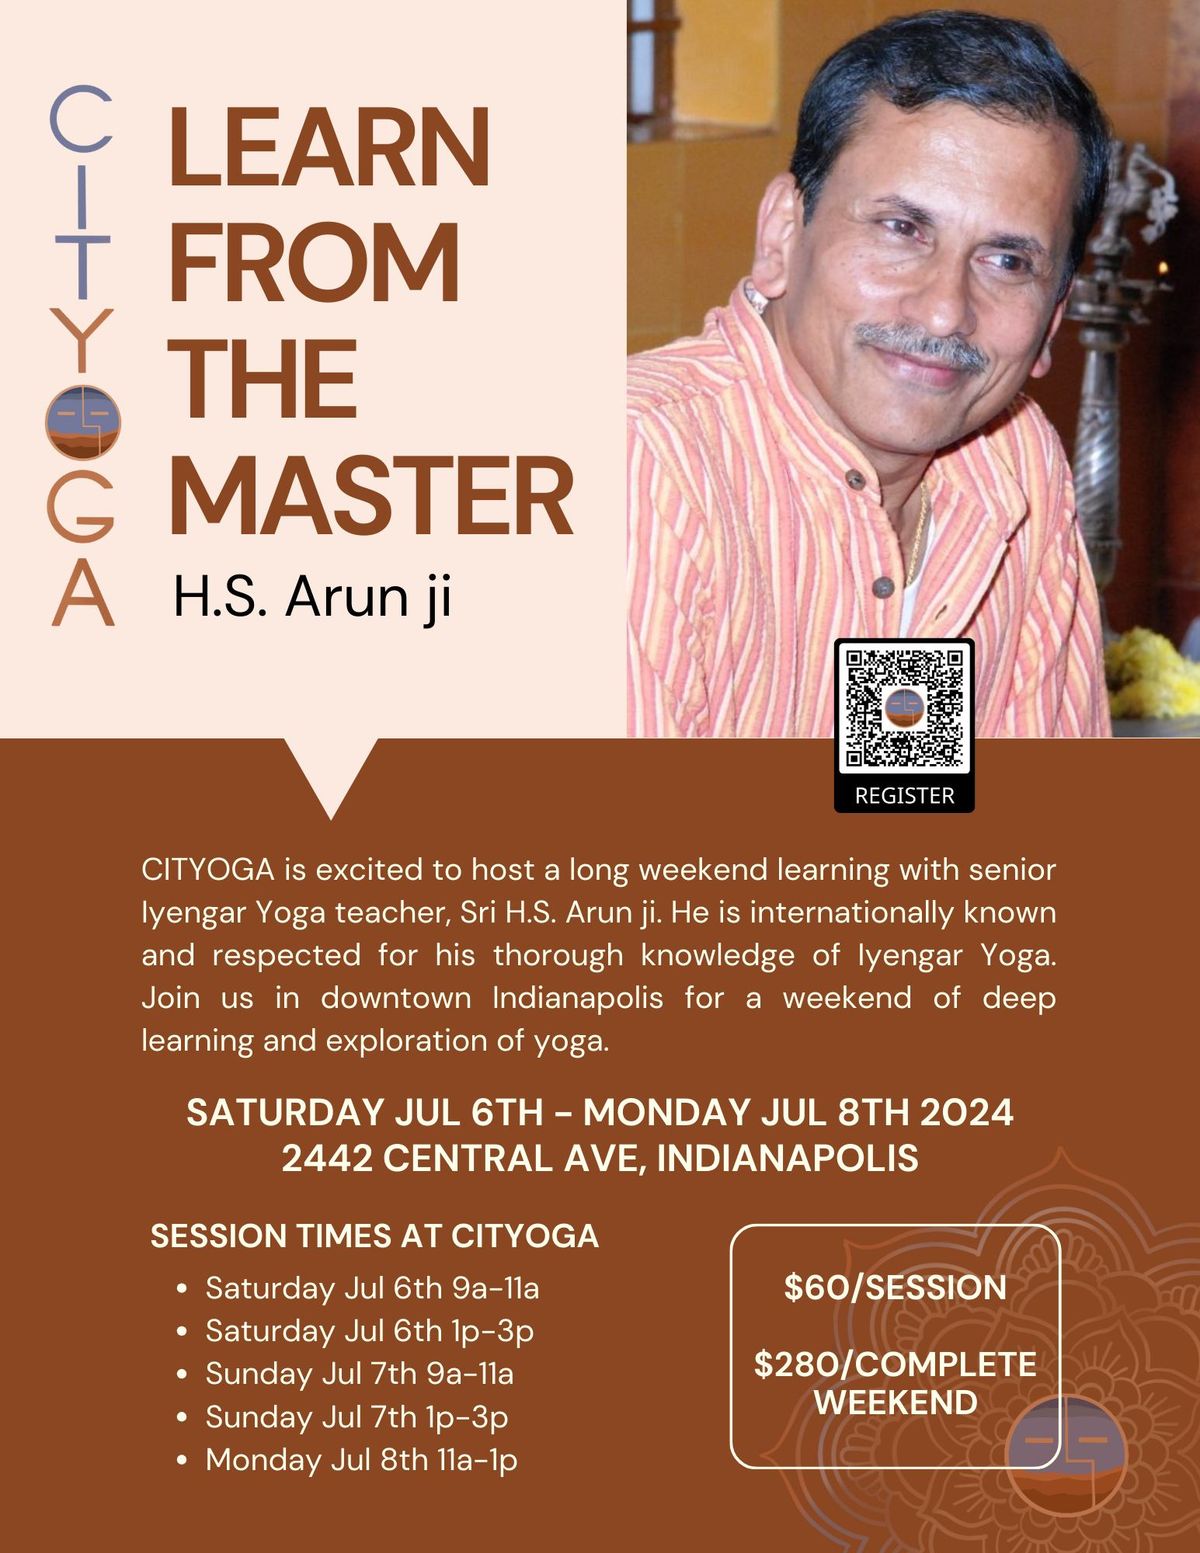 Learn From The Master - H.S.Arun ji